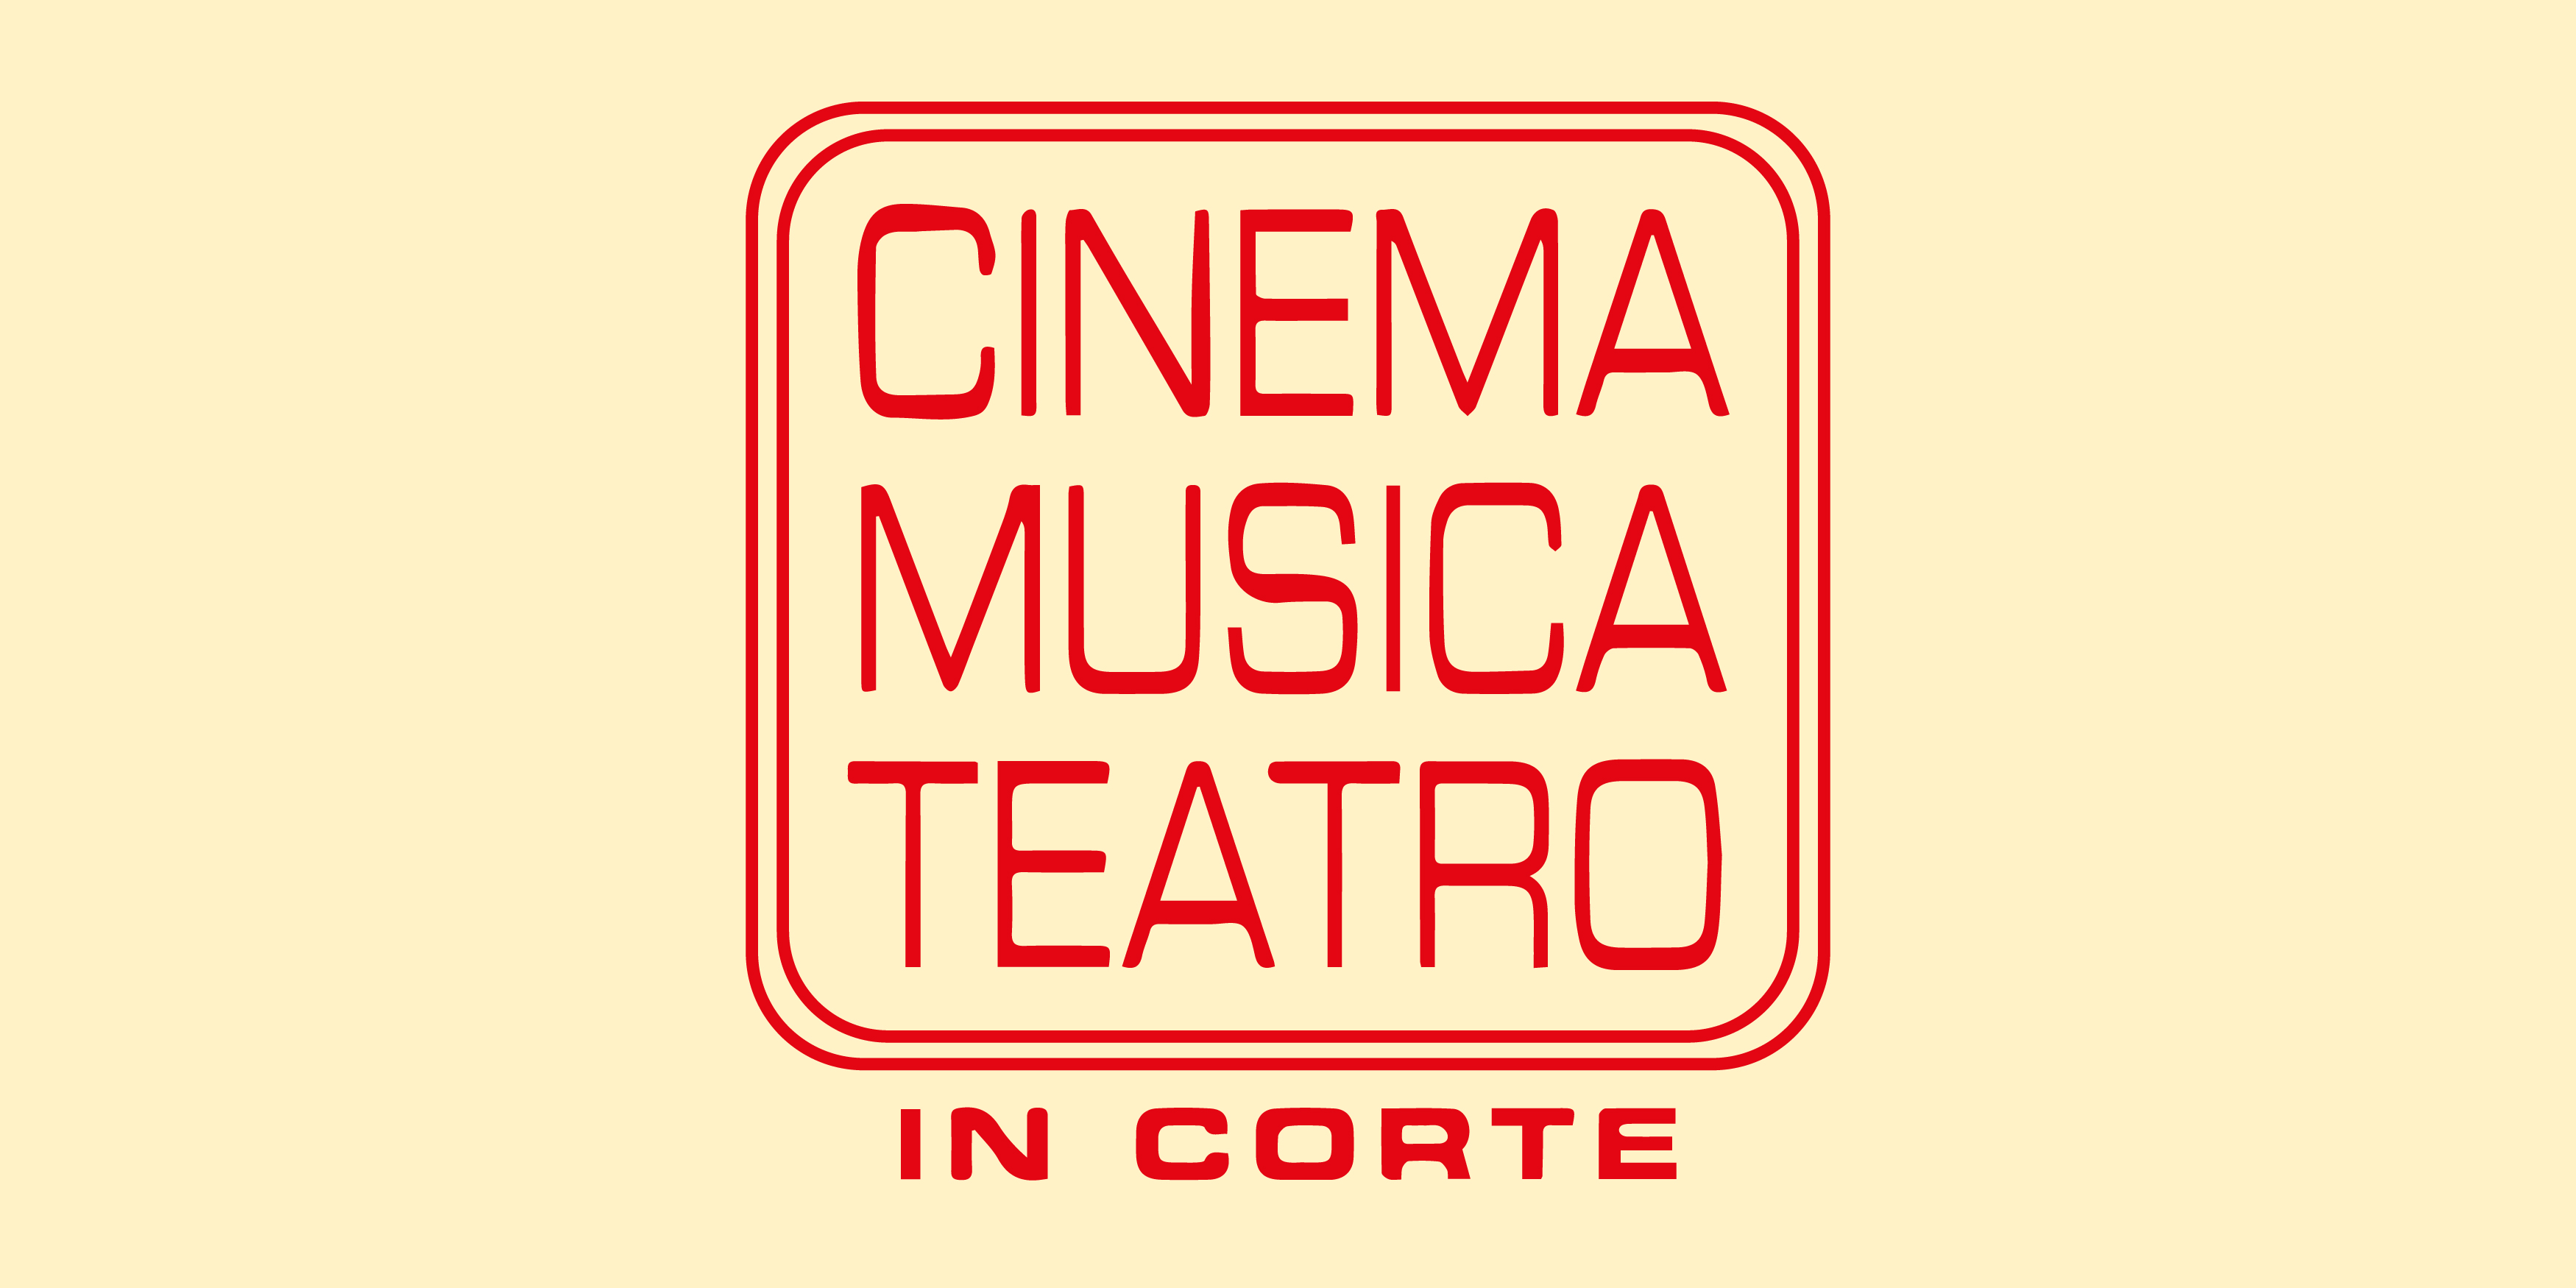 Cinema, Musica Teatro in corte